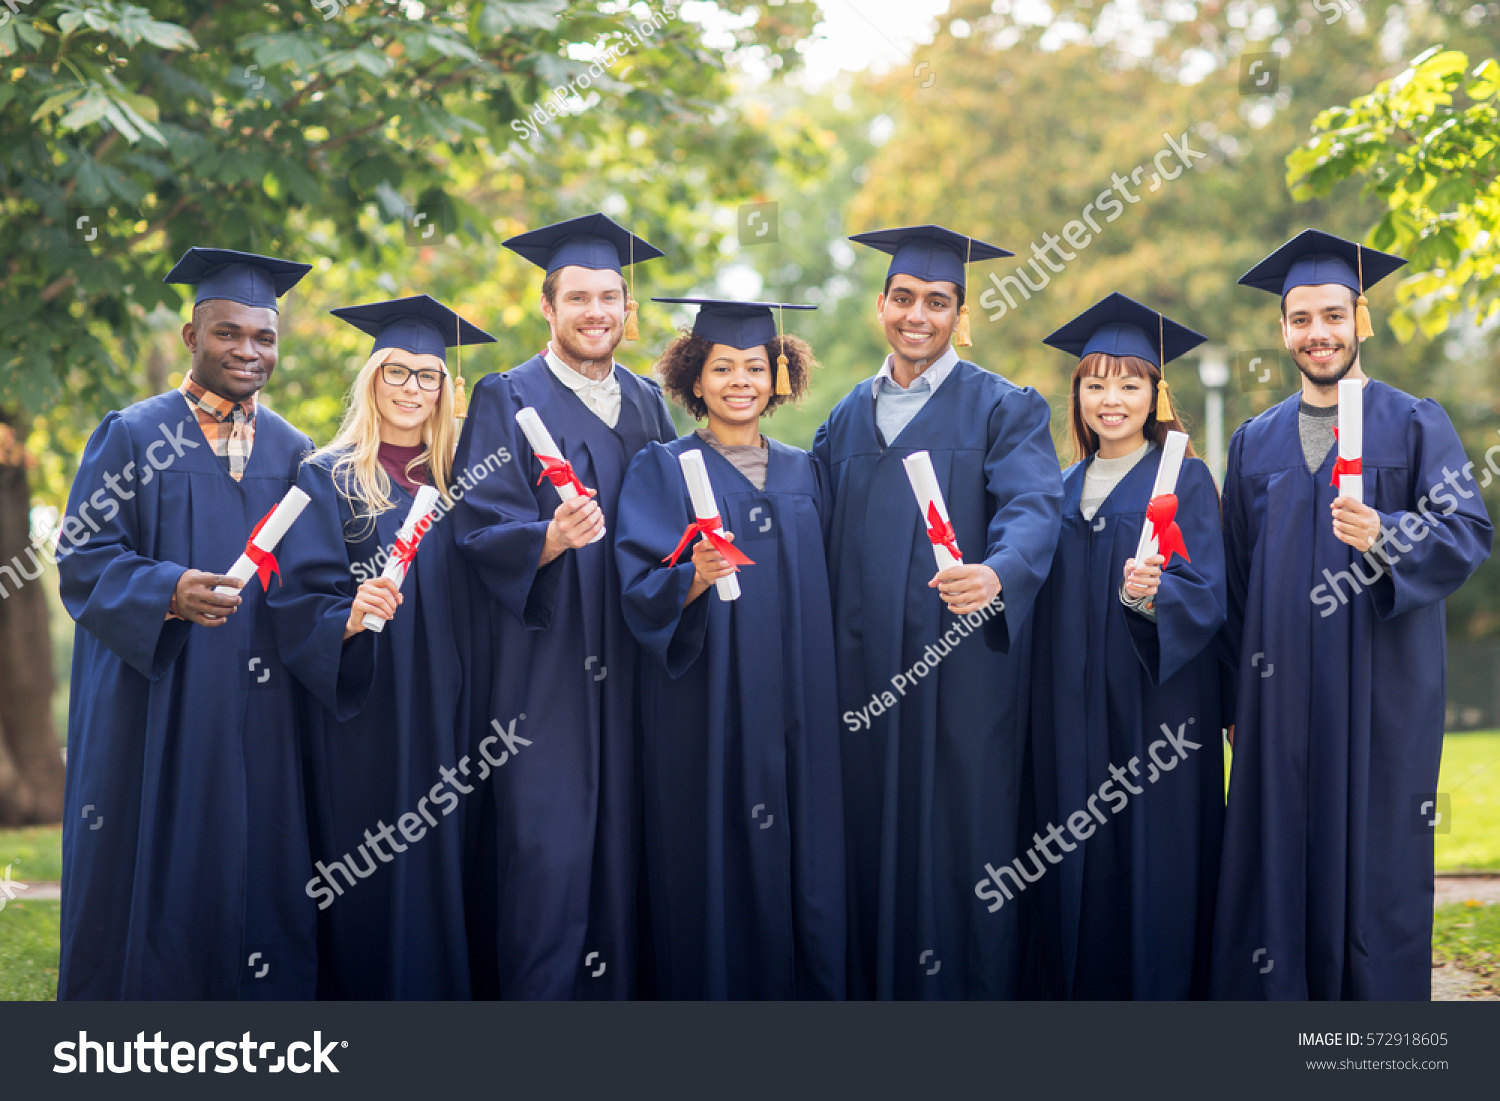 Edit Images Free Online - education, graduation | Shutterstock Editor